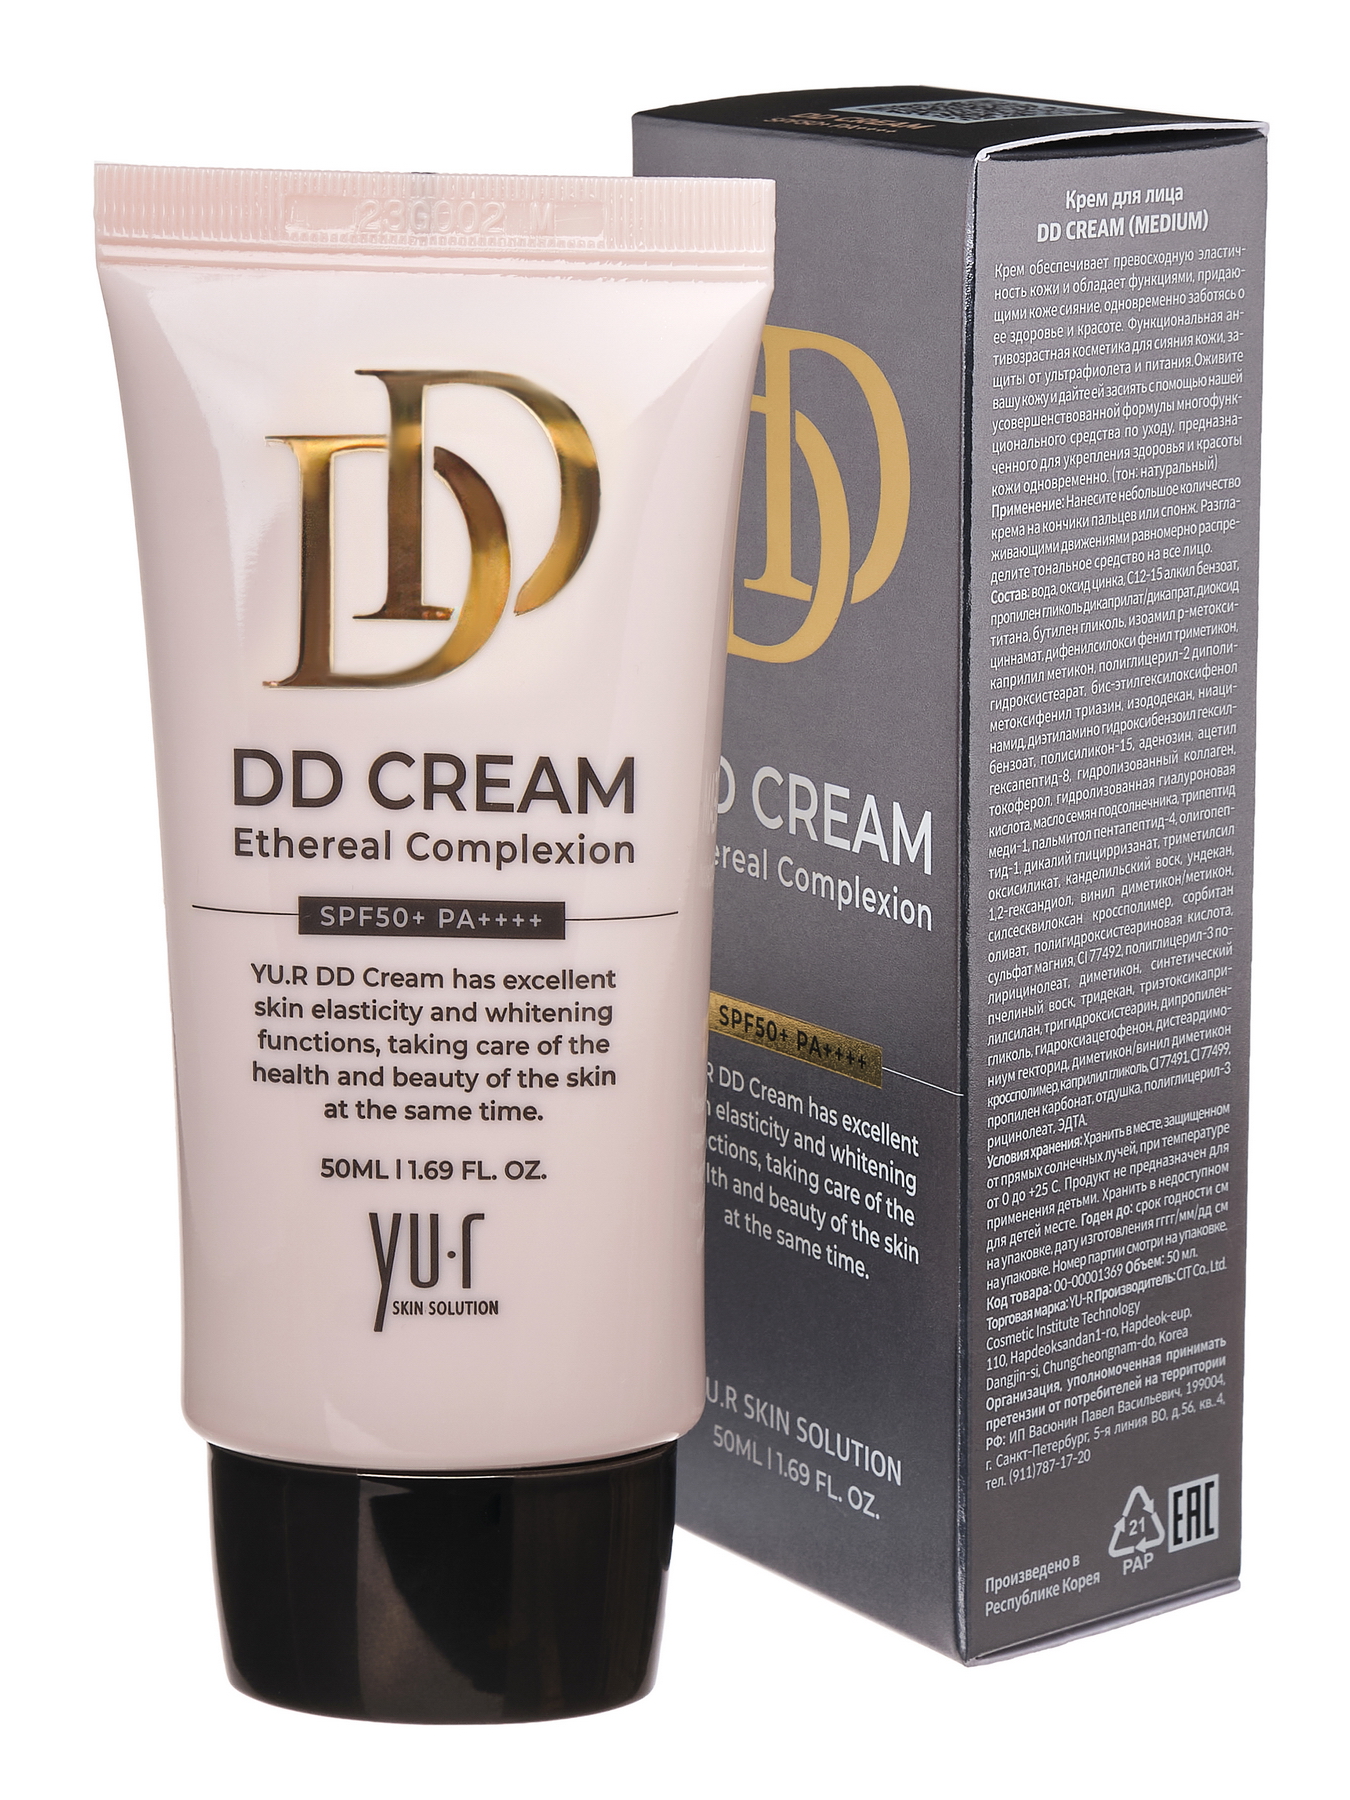 Корректирующий DD-крем для лица Yur DD Cream Medium SPF50+ PA++++ 50 мл набор совершенный тон кожи натурально бежевый оттенок